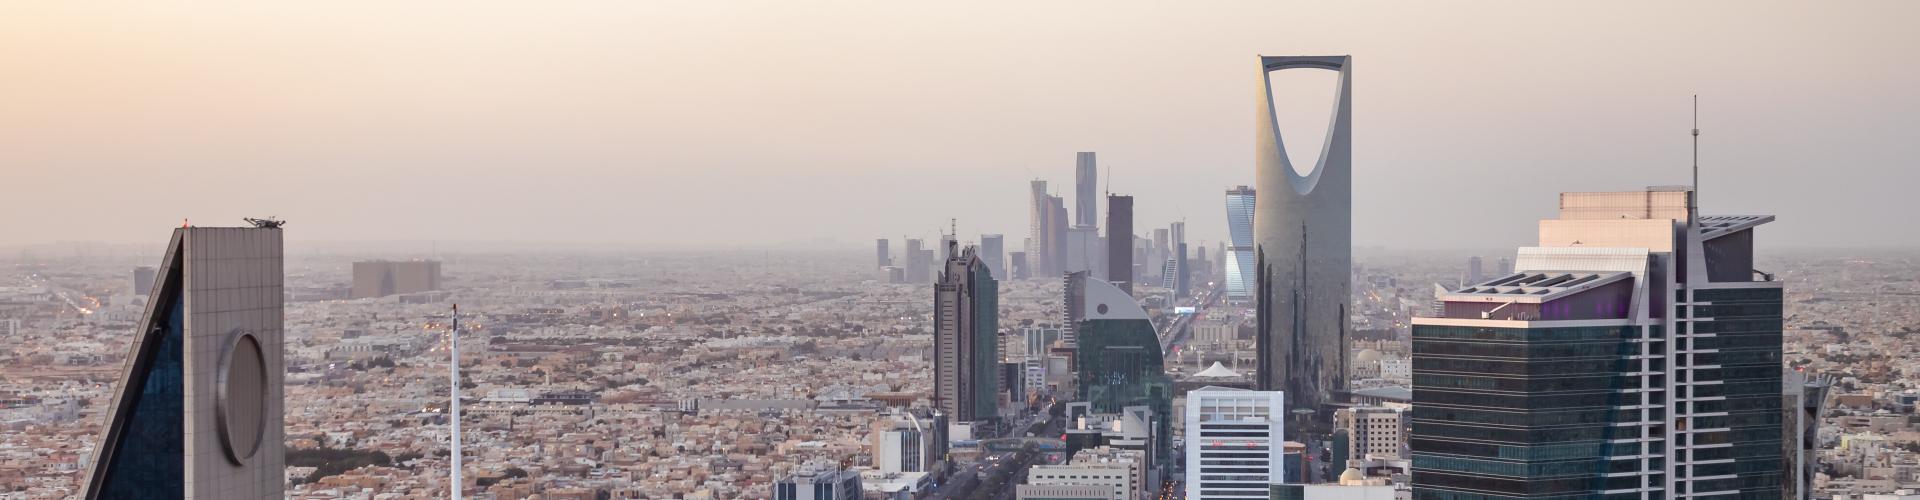 Riyadh skyline